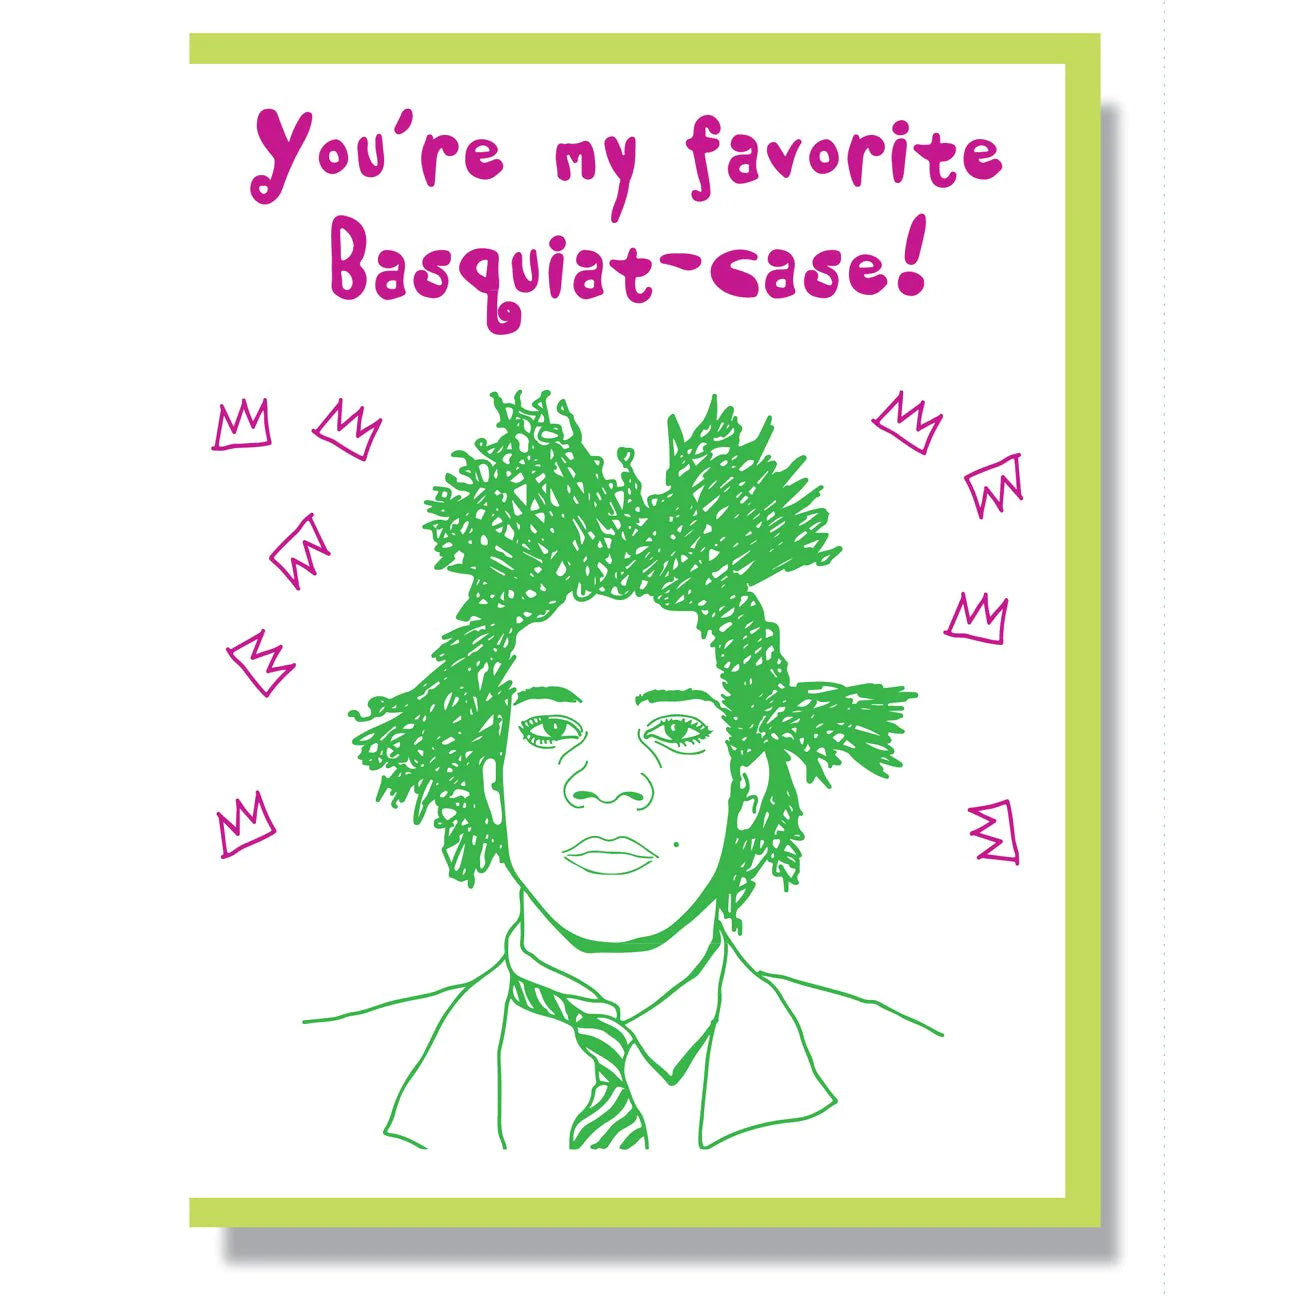 Basquiat-Case - Greeting Card